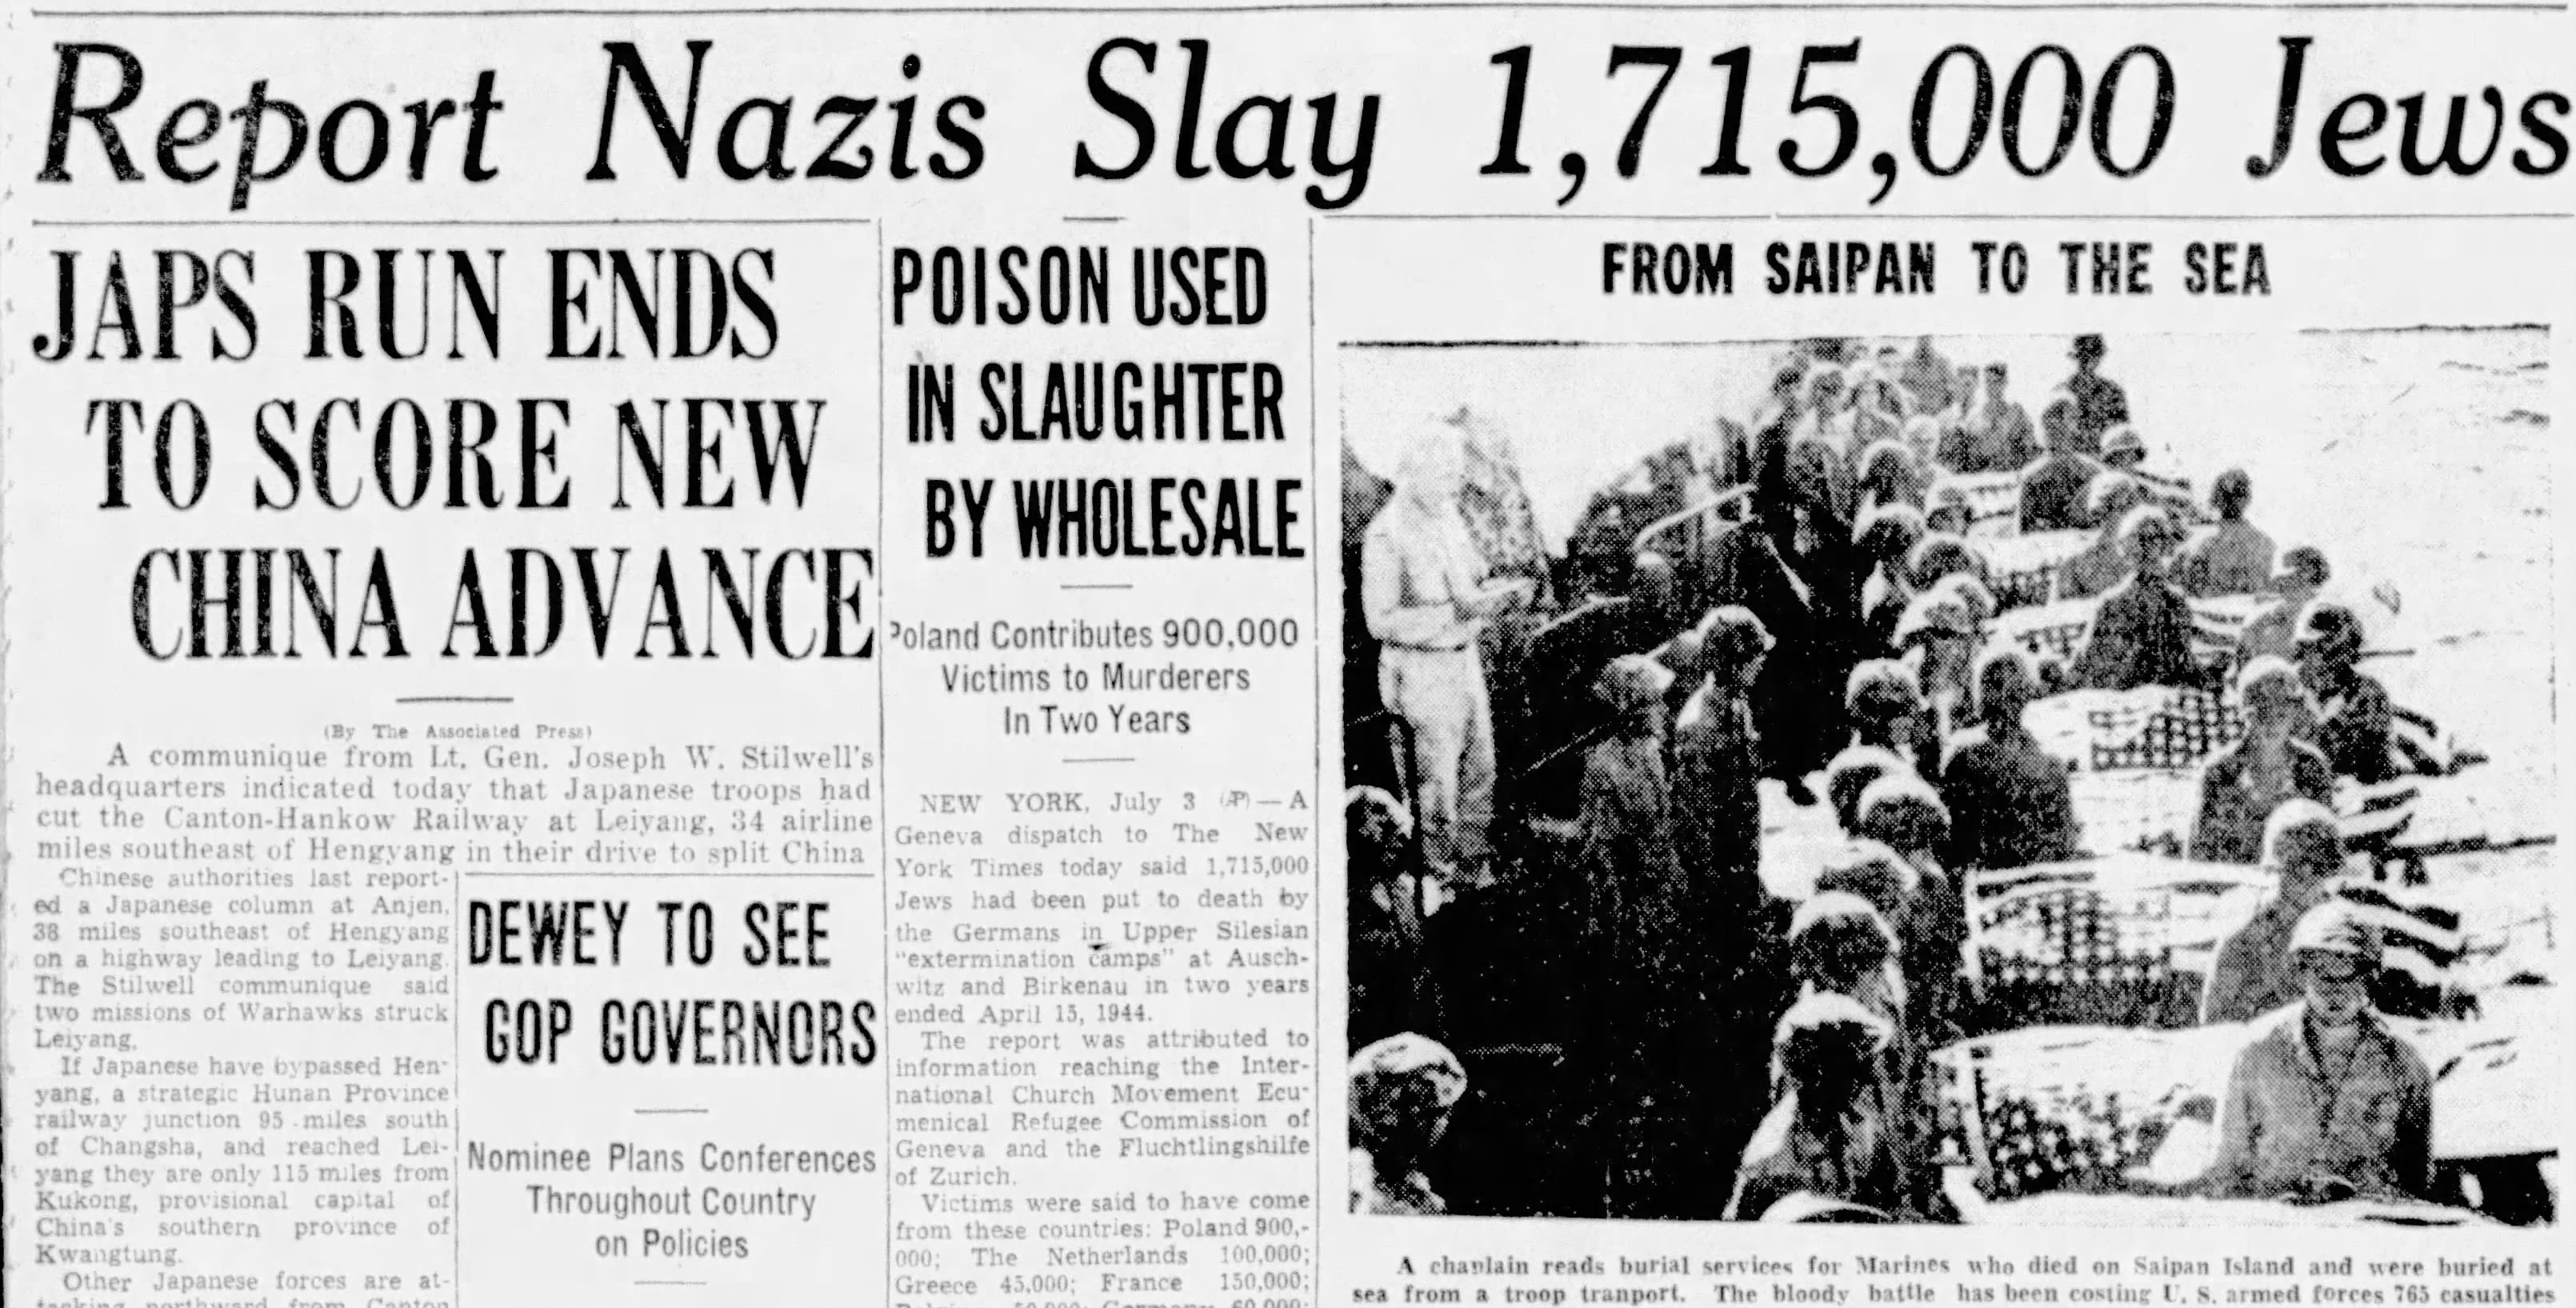 Report Nazis Slay 1,715,000 Jews